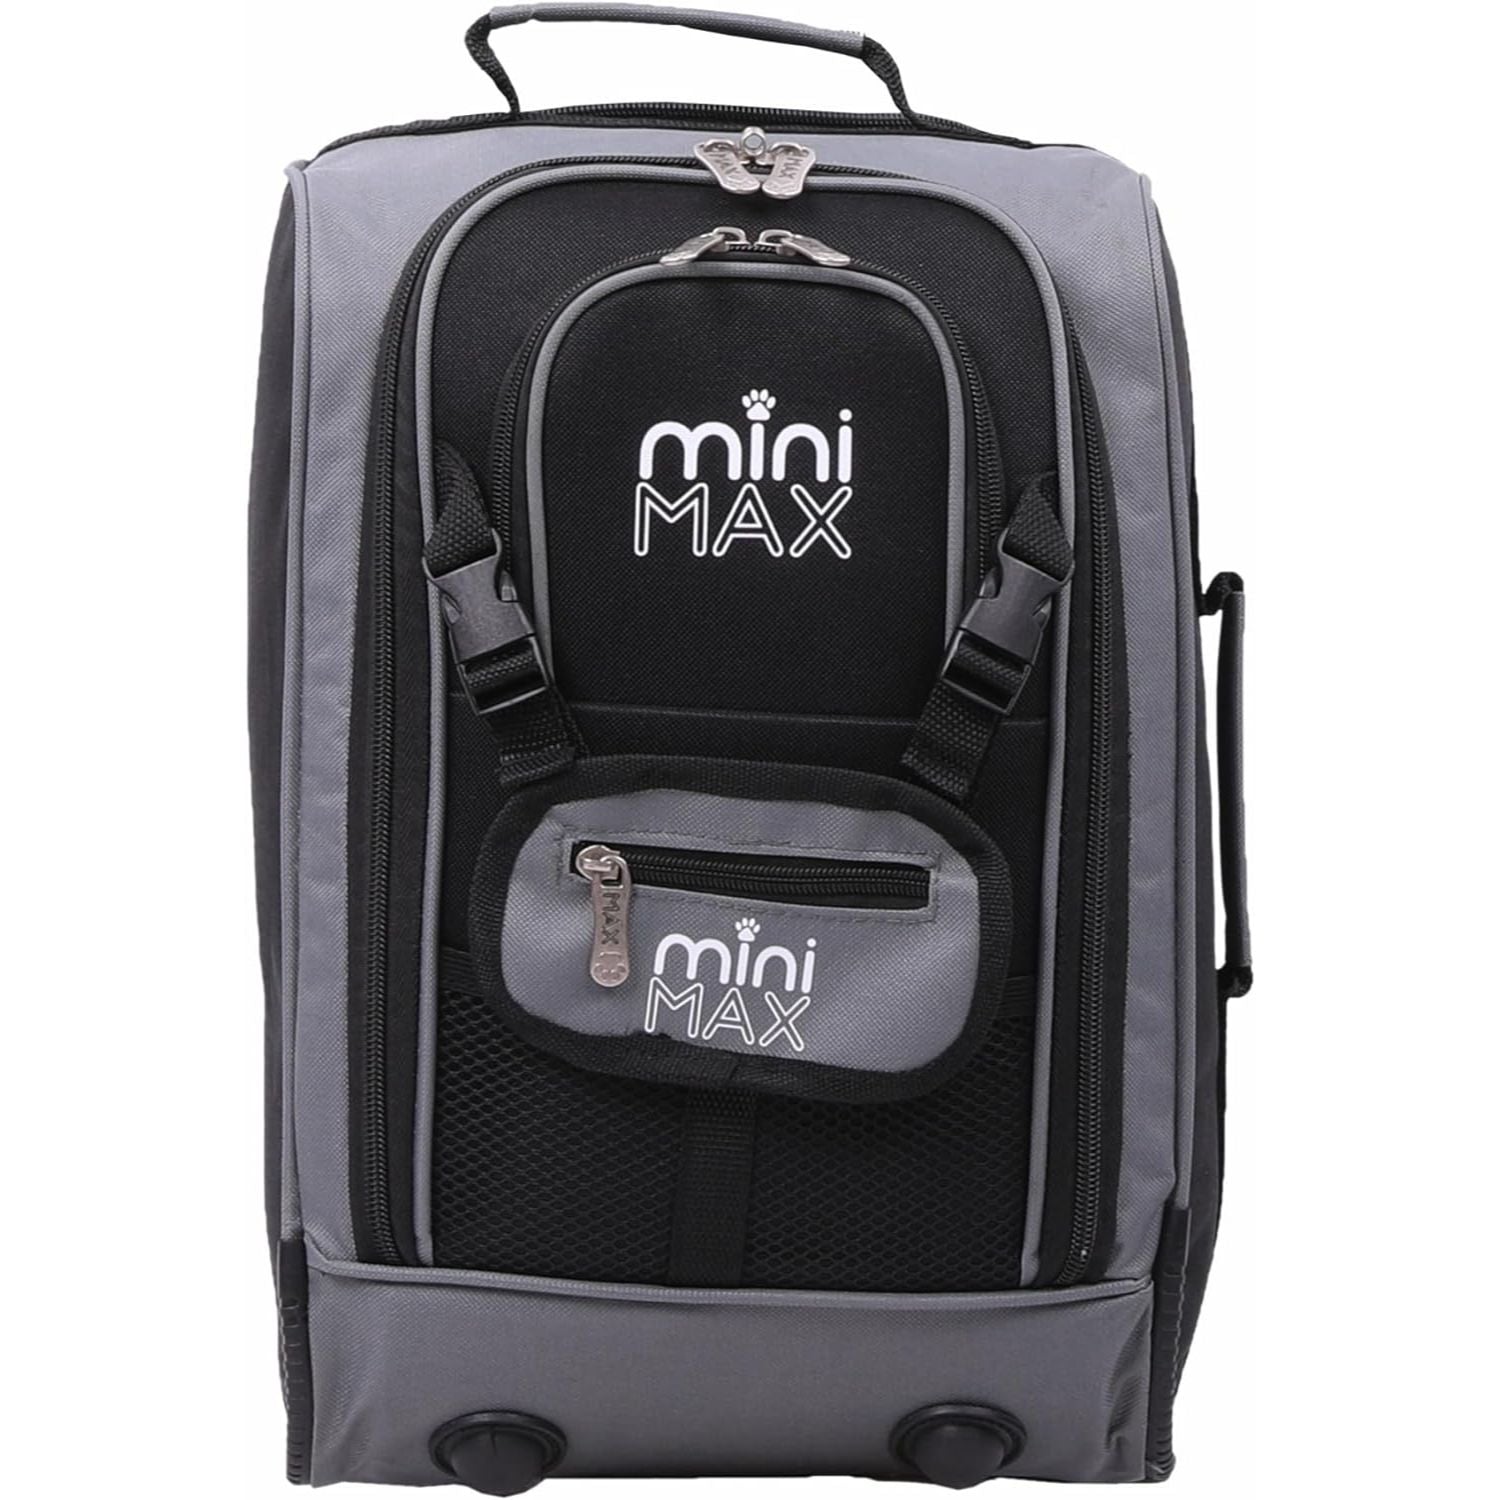 Aerolite MiniMax Ryanair Maximum 40x20x25cm Size Cabin Hand Luggage, 20L Under Seat Trolley Backpack, Carry On Cabin Hand Luggage with 2 Year Warranty - Aerolite UK